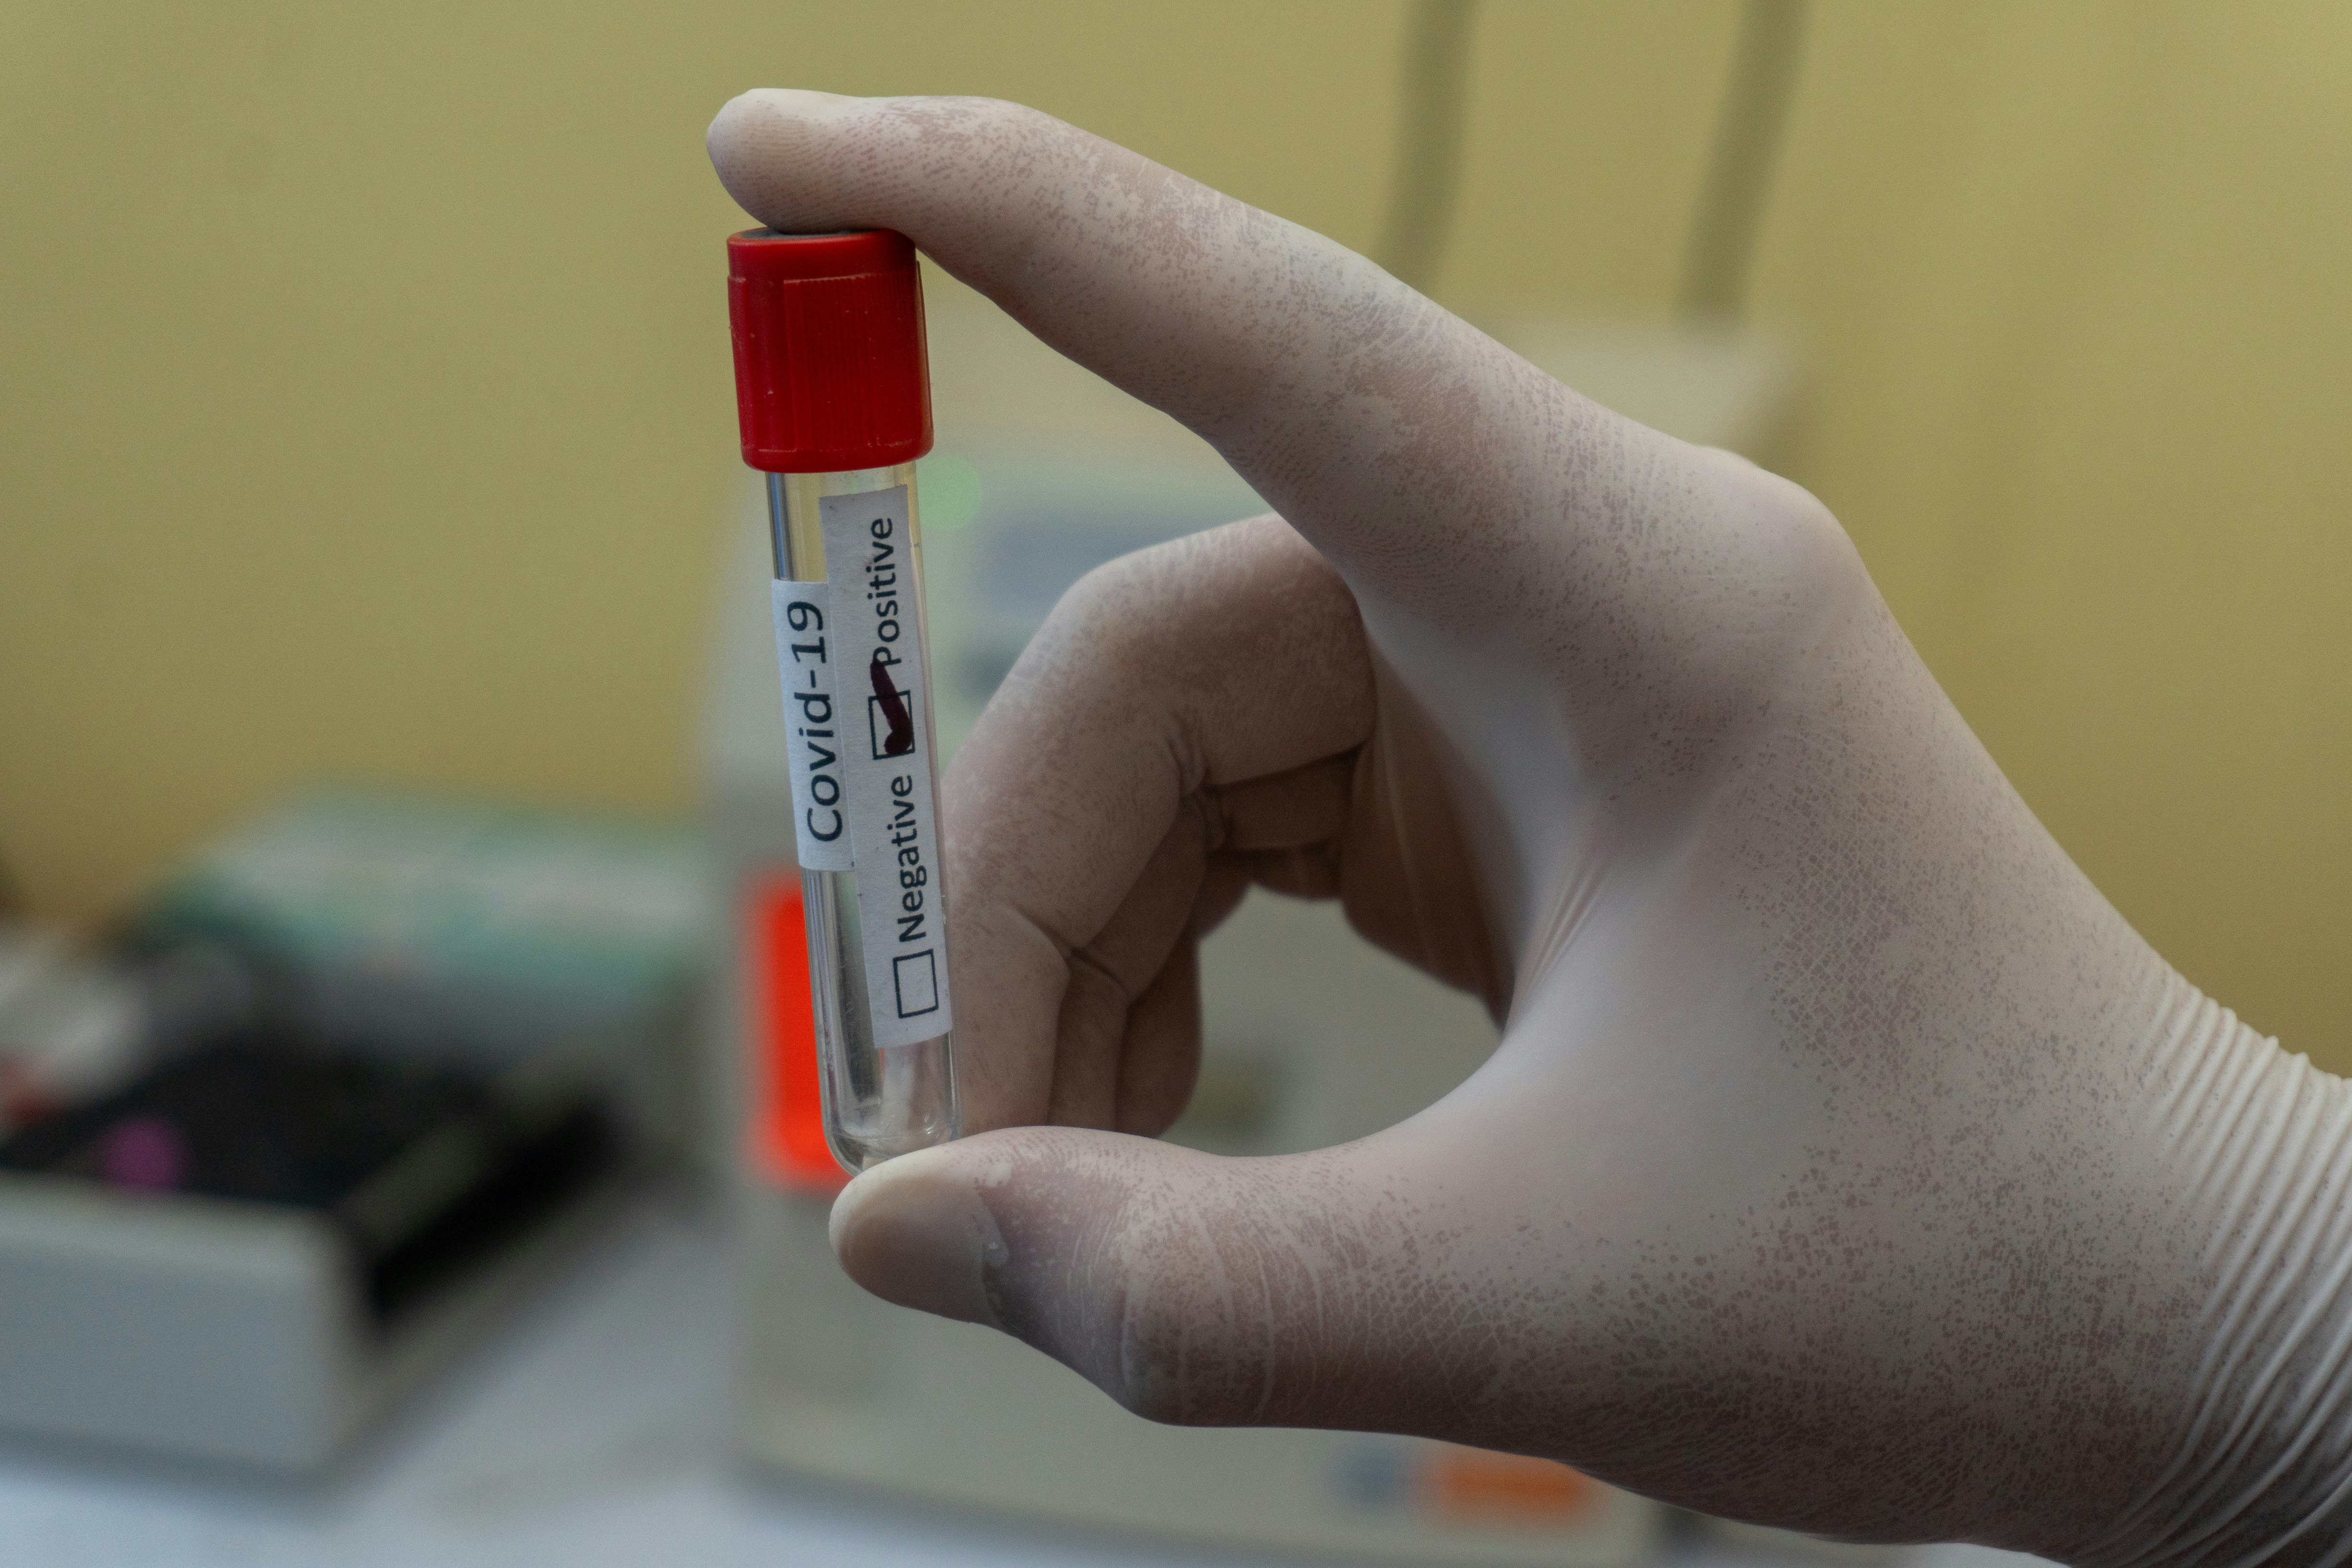 Empty blood tube with Positive Coronavirus label